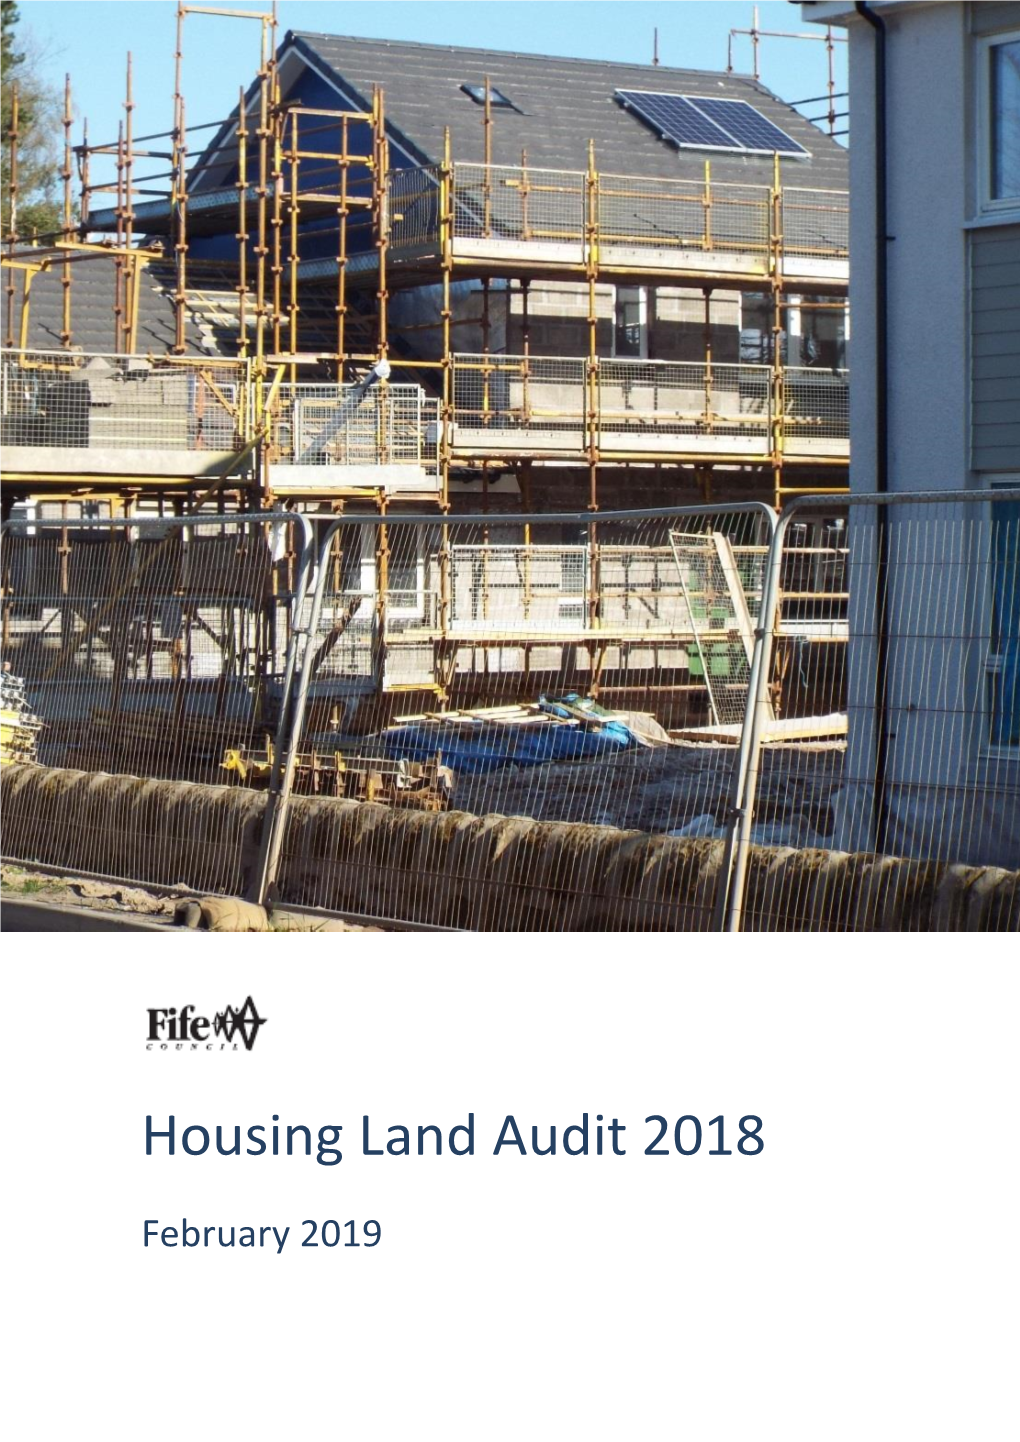 Fife Housing Land Audit 2018